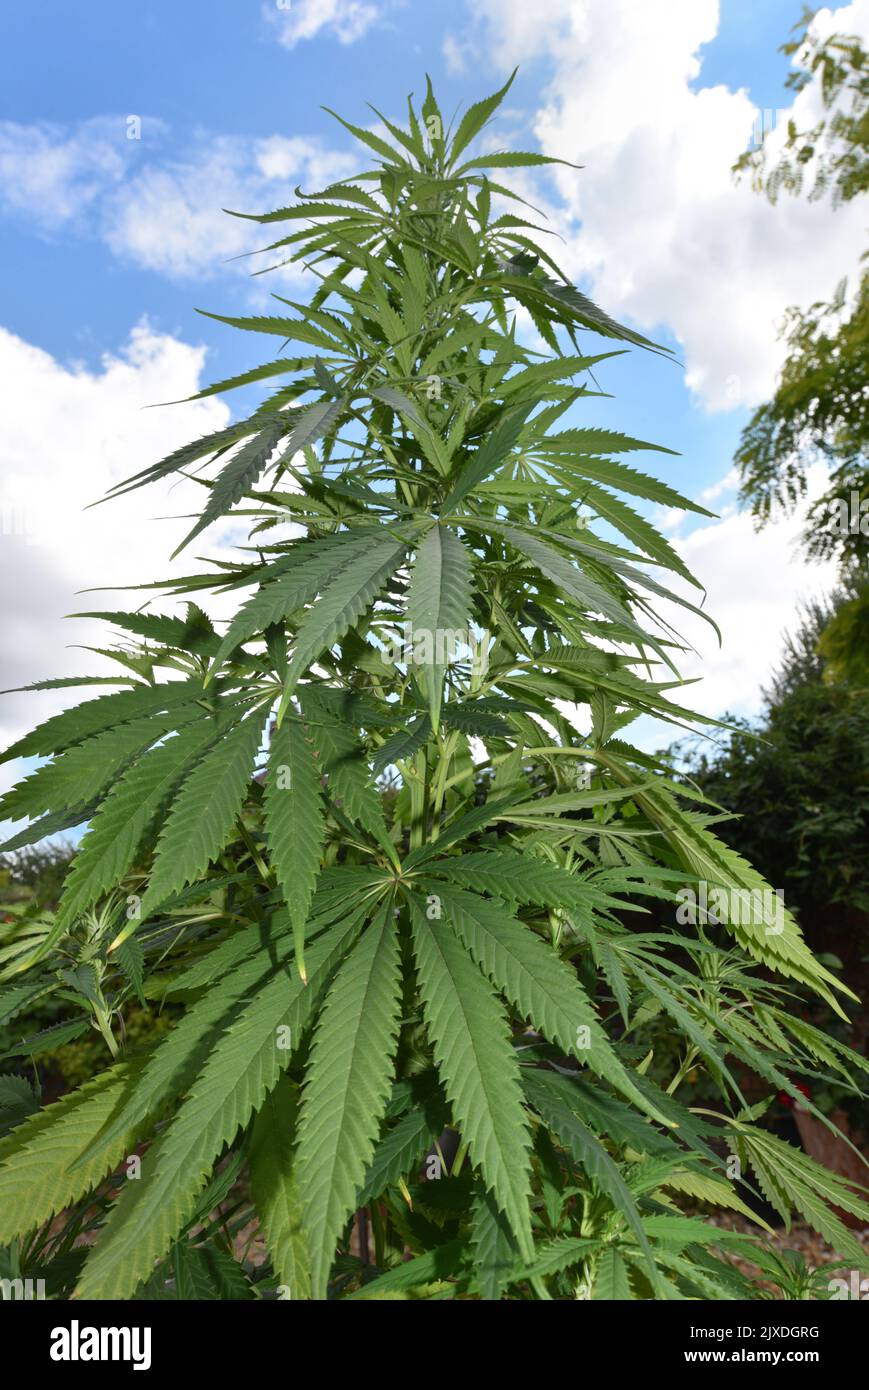 Hemp - Cannabis sativa Stock Photo